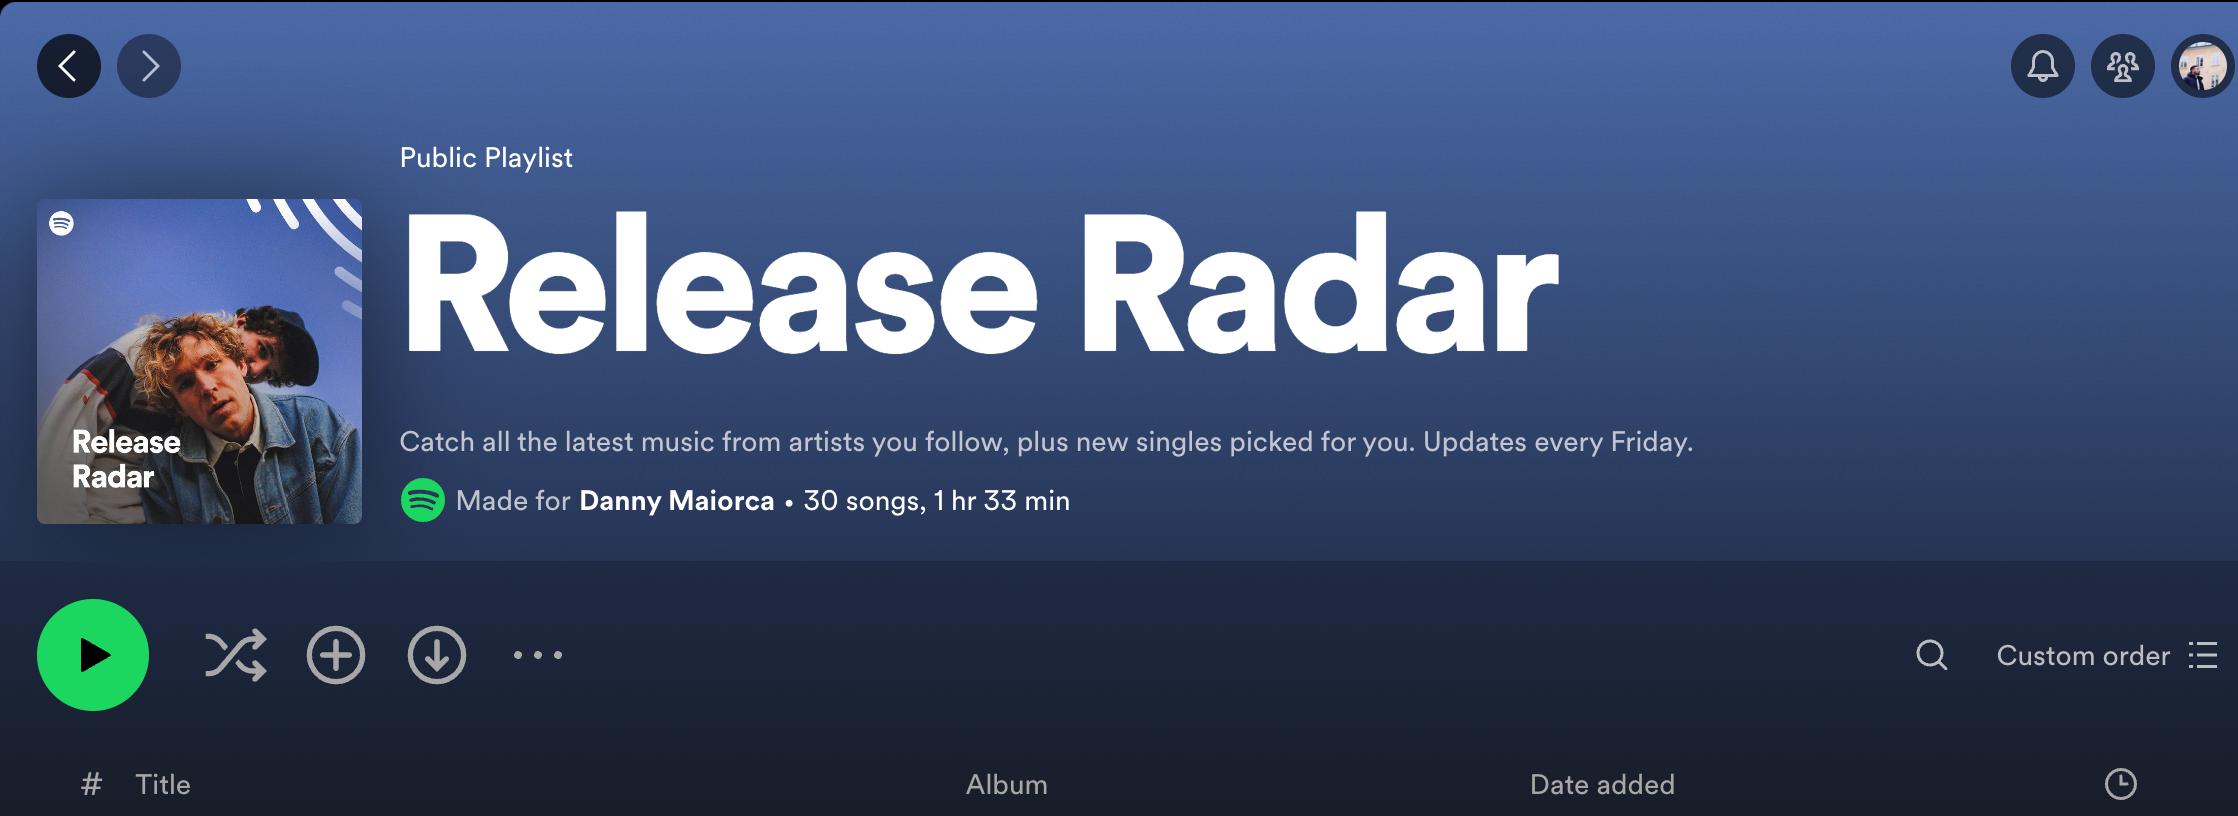 The Release Radar Playlist on Spotify